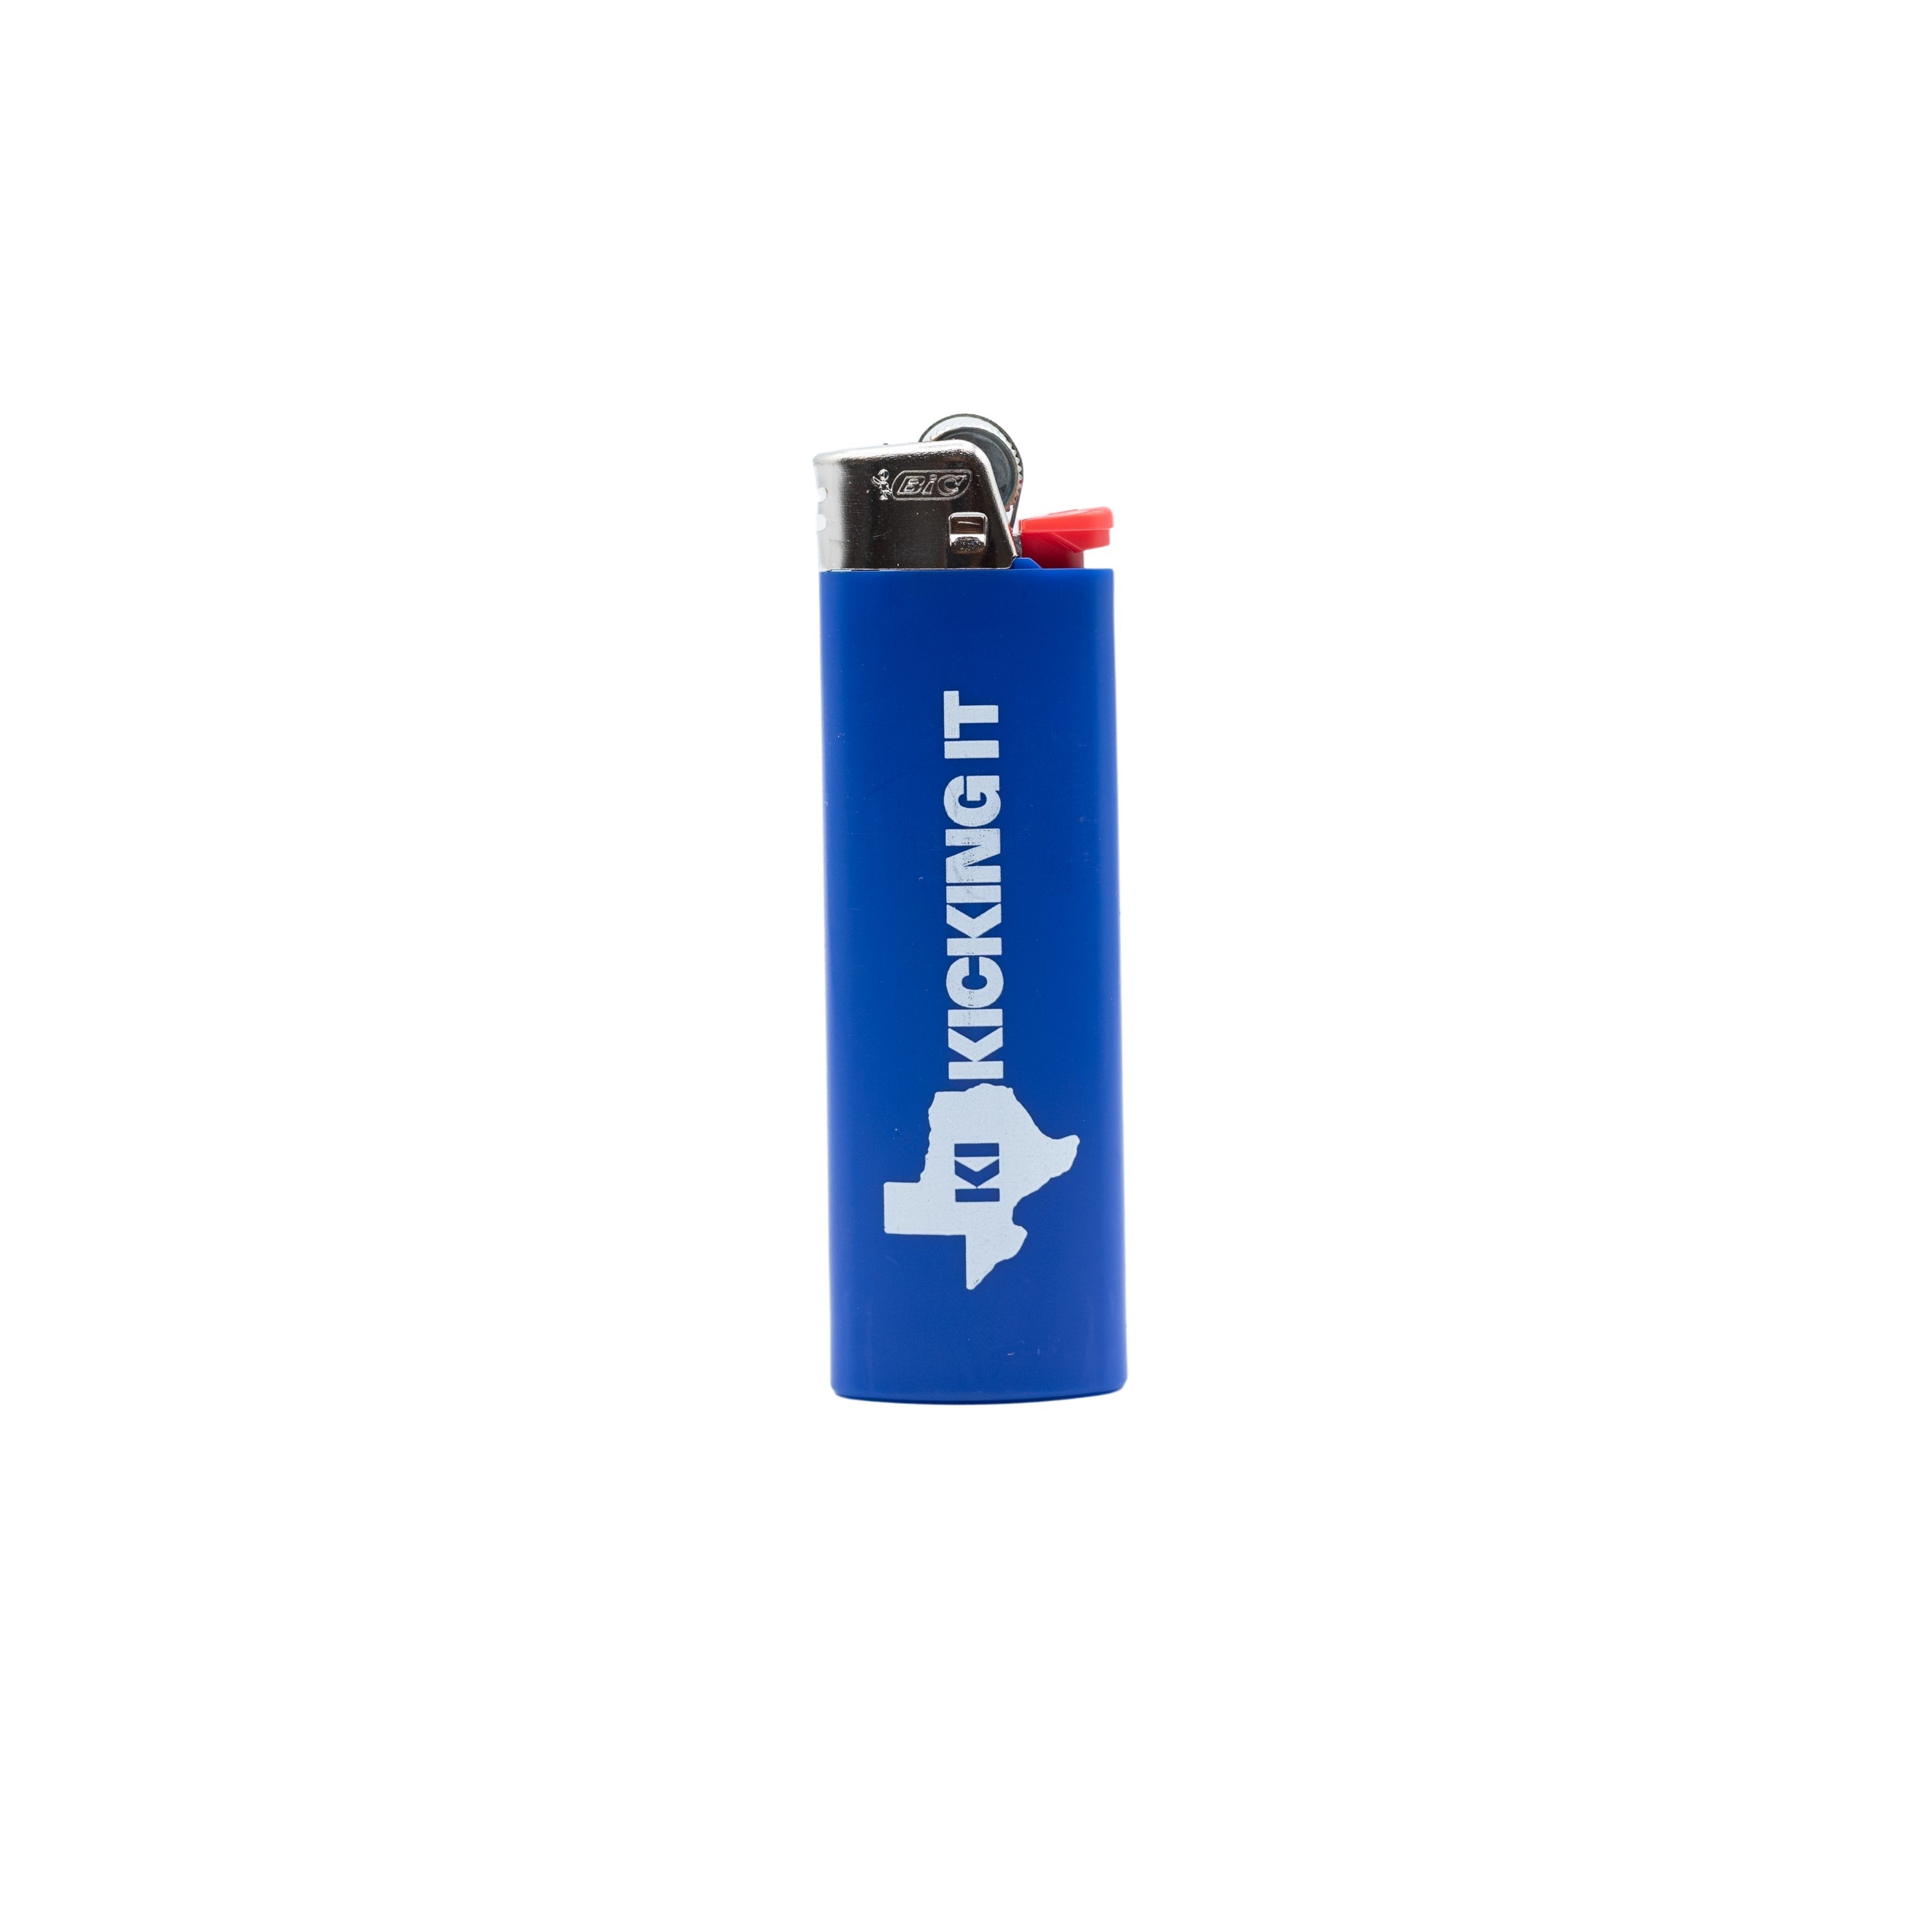 Blue KI Bic Lighter (Texas)